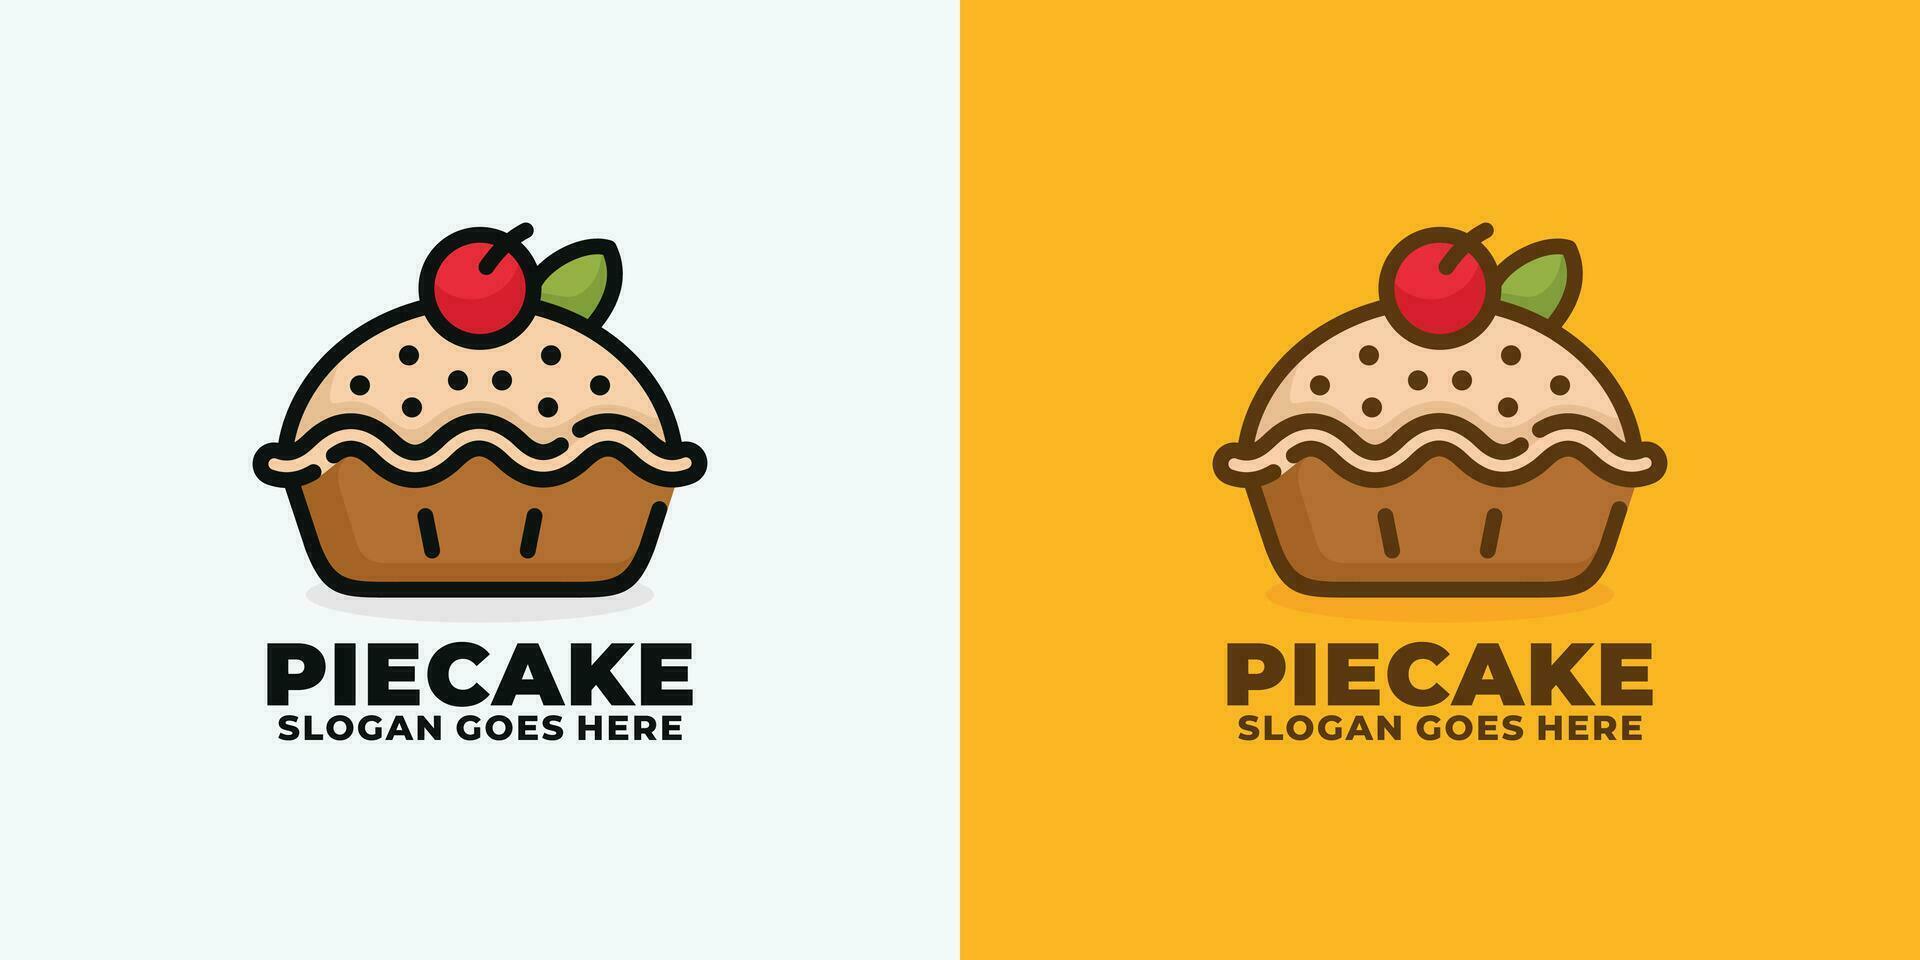 Pie cake logo design vector illustration